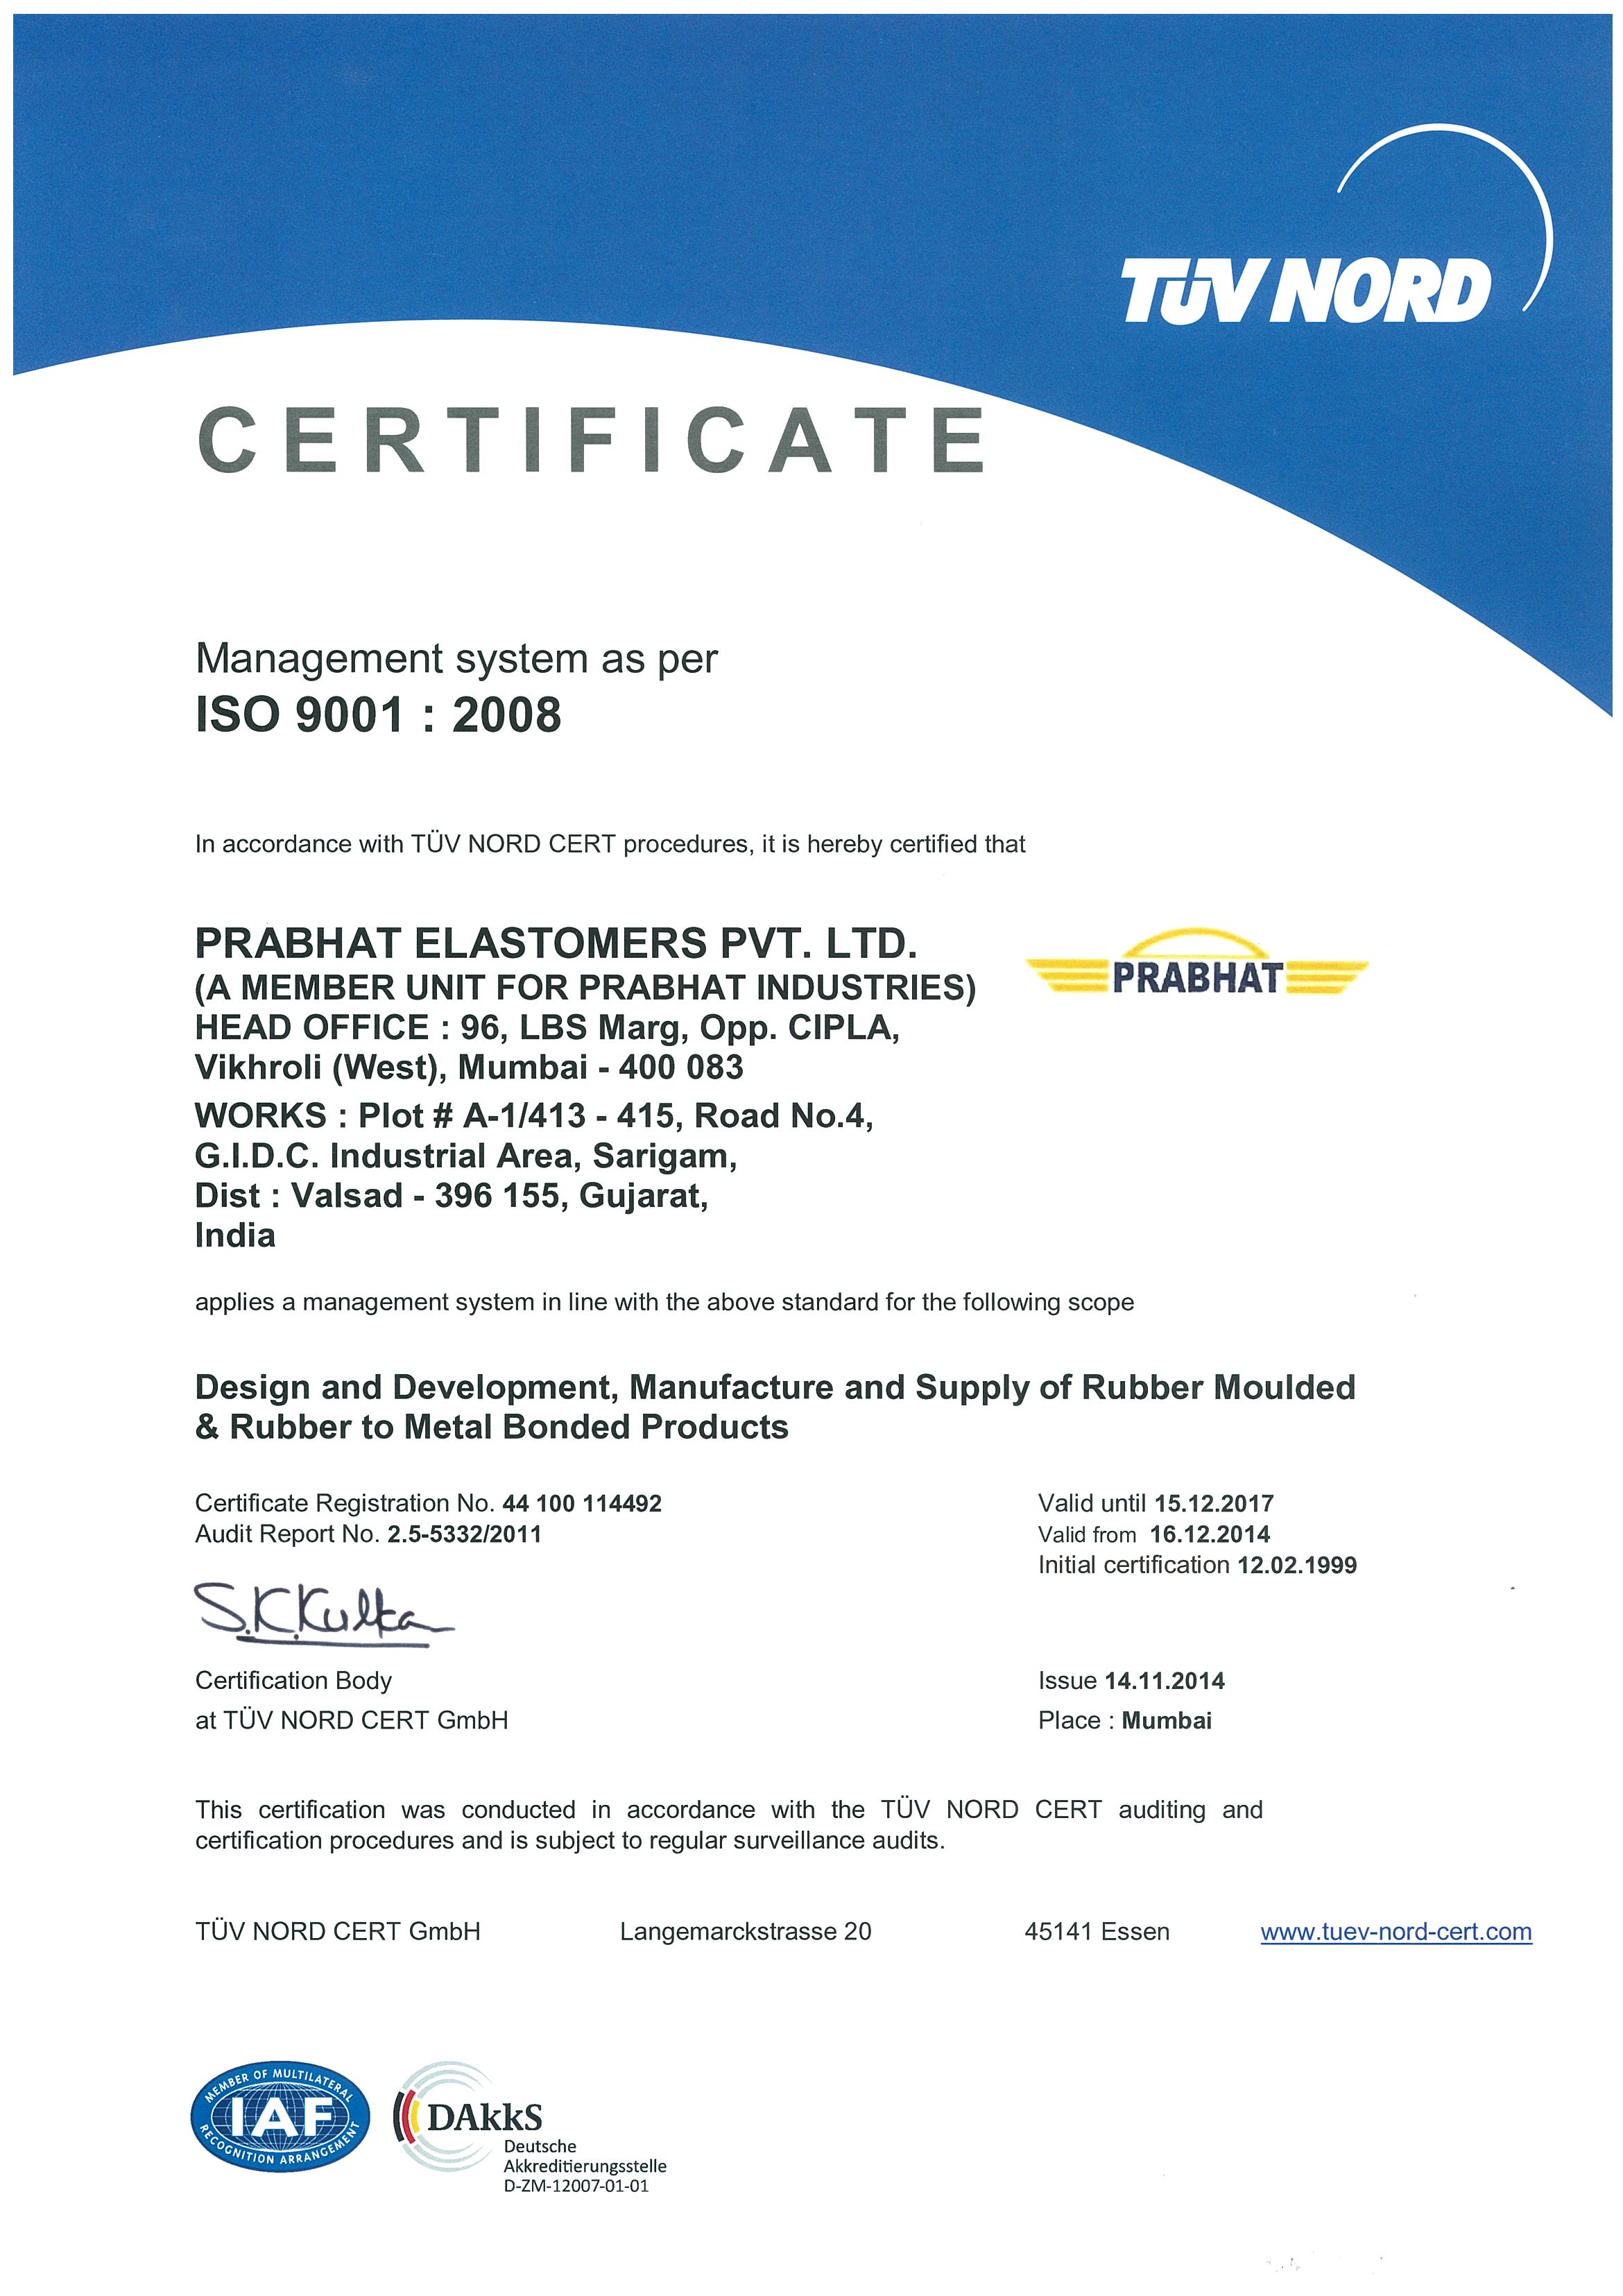 ISO 9001 : 2008 (Certificate Registration No. 20002410 QM08)